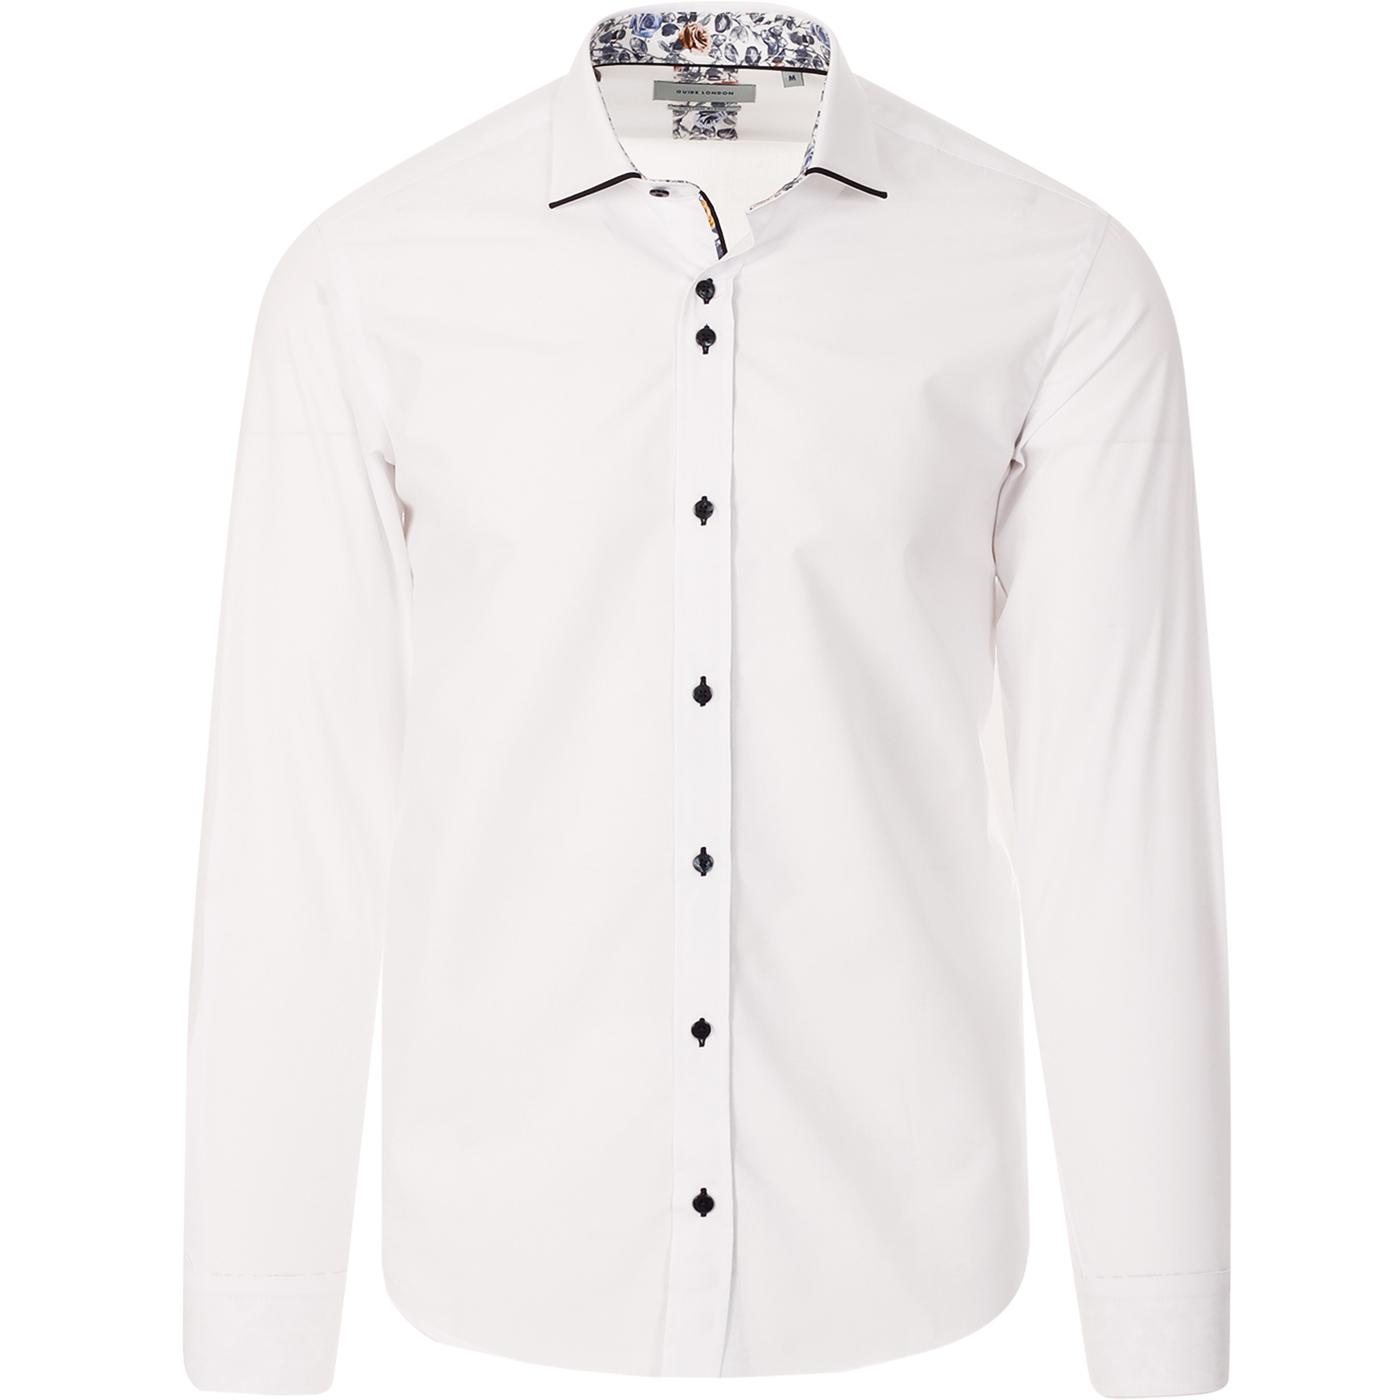 GUIDE LONDON Men's Mod Tipped Smart Shirt (White)